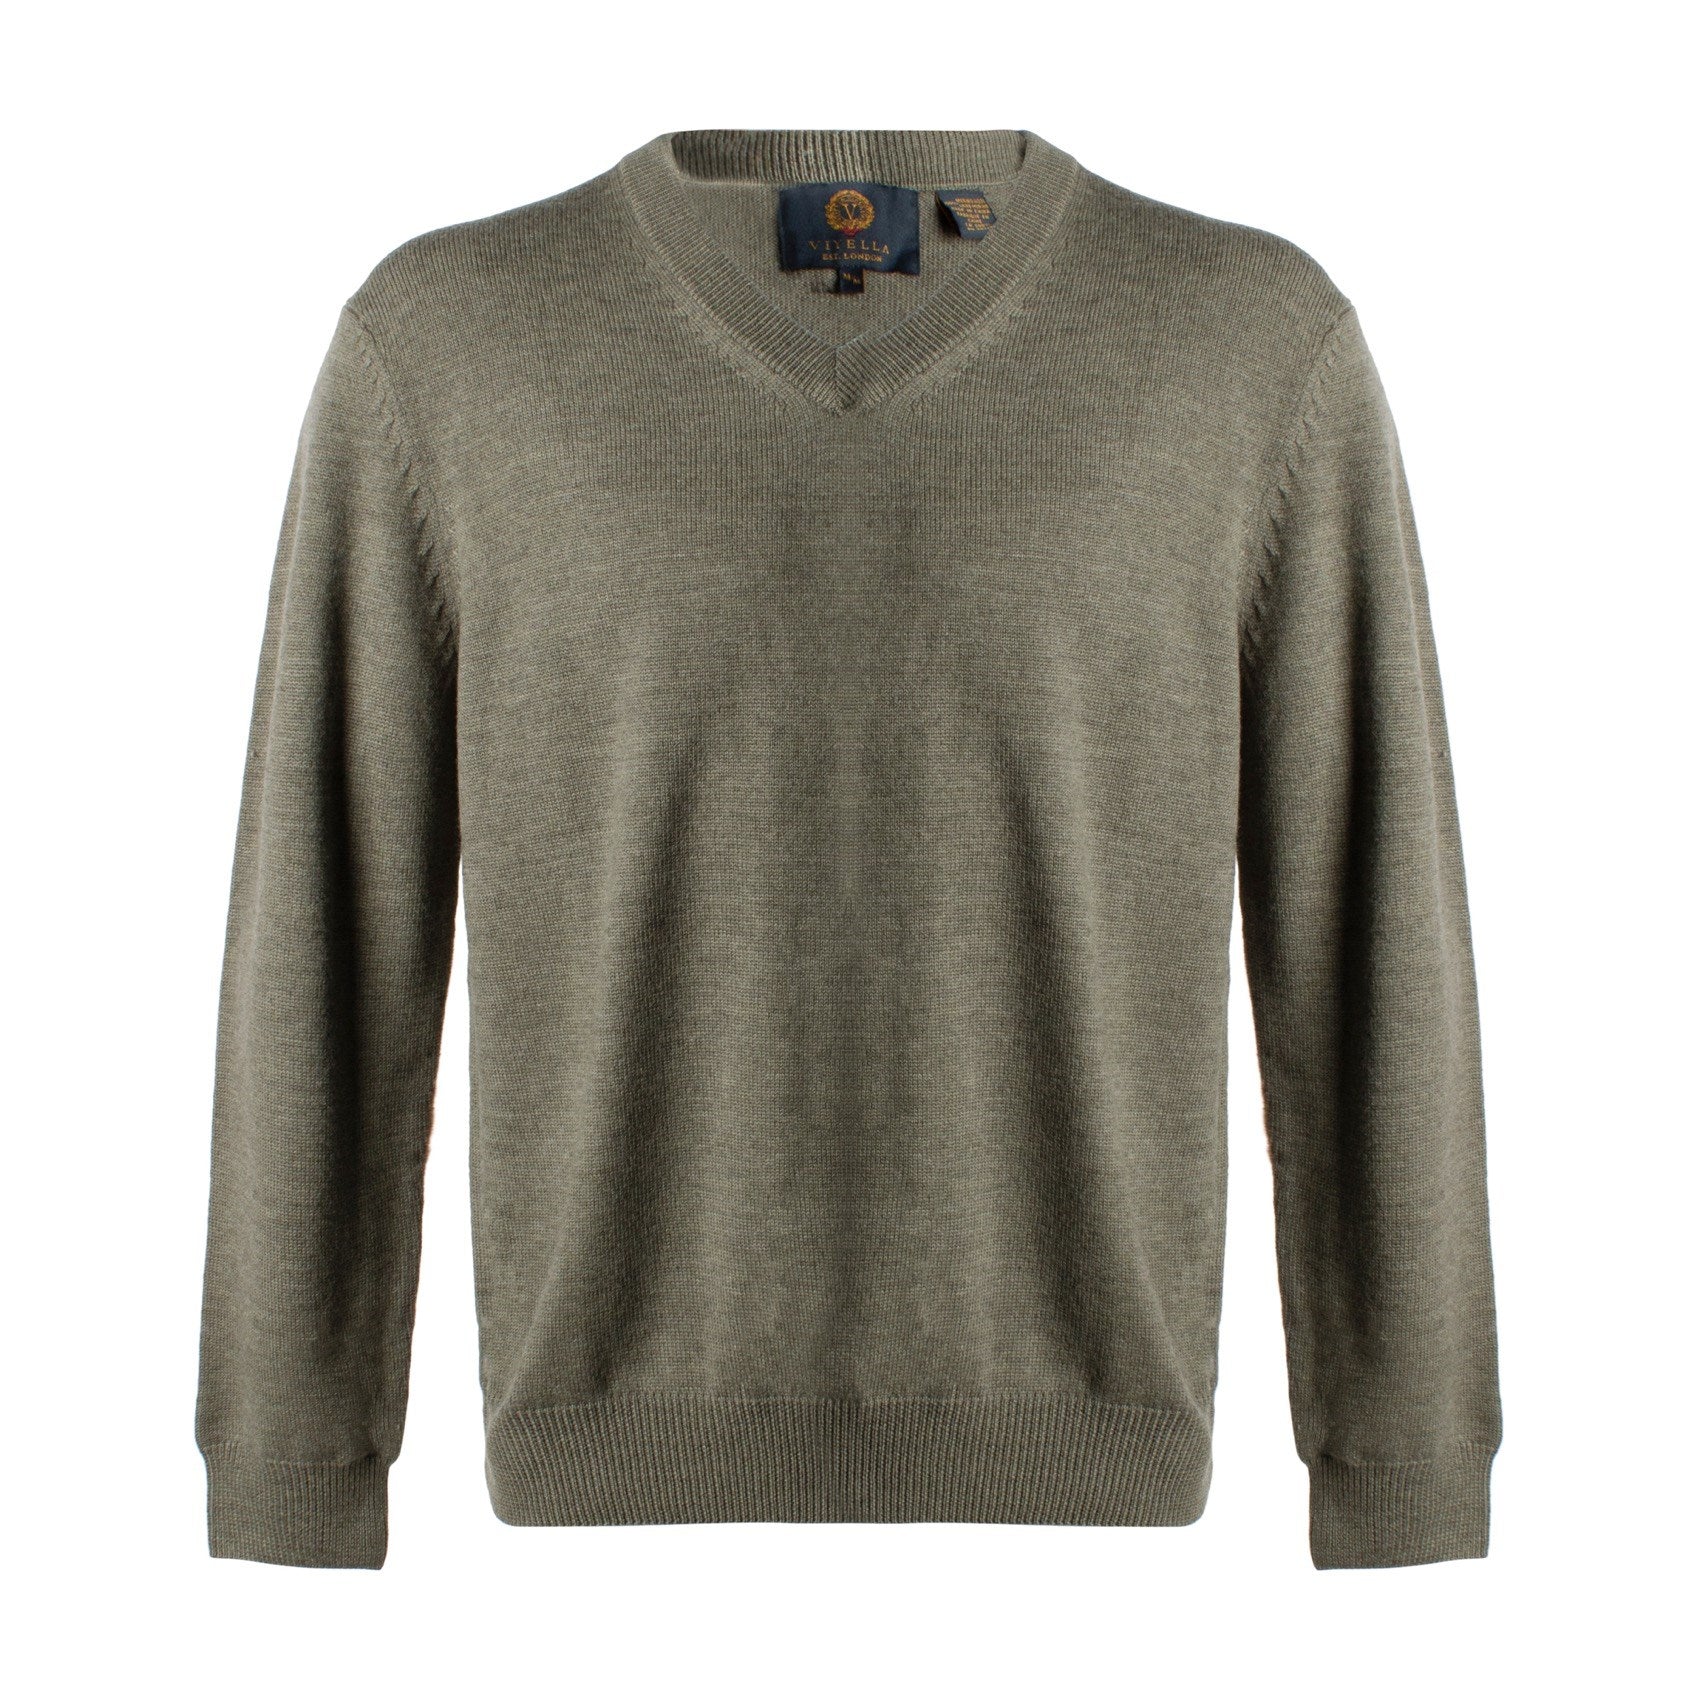 Extra Fine 'Zegna Baruffa' Merino Wool V-Neck Sweater in Sage Melange by Viyella